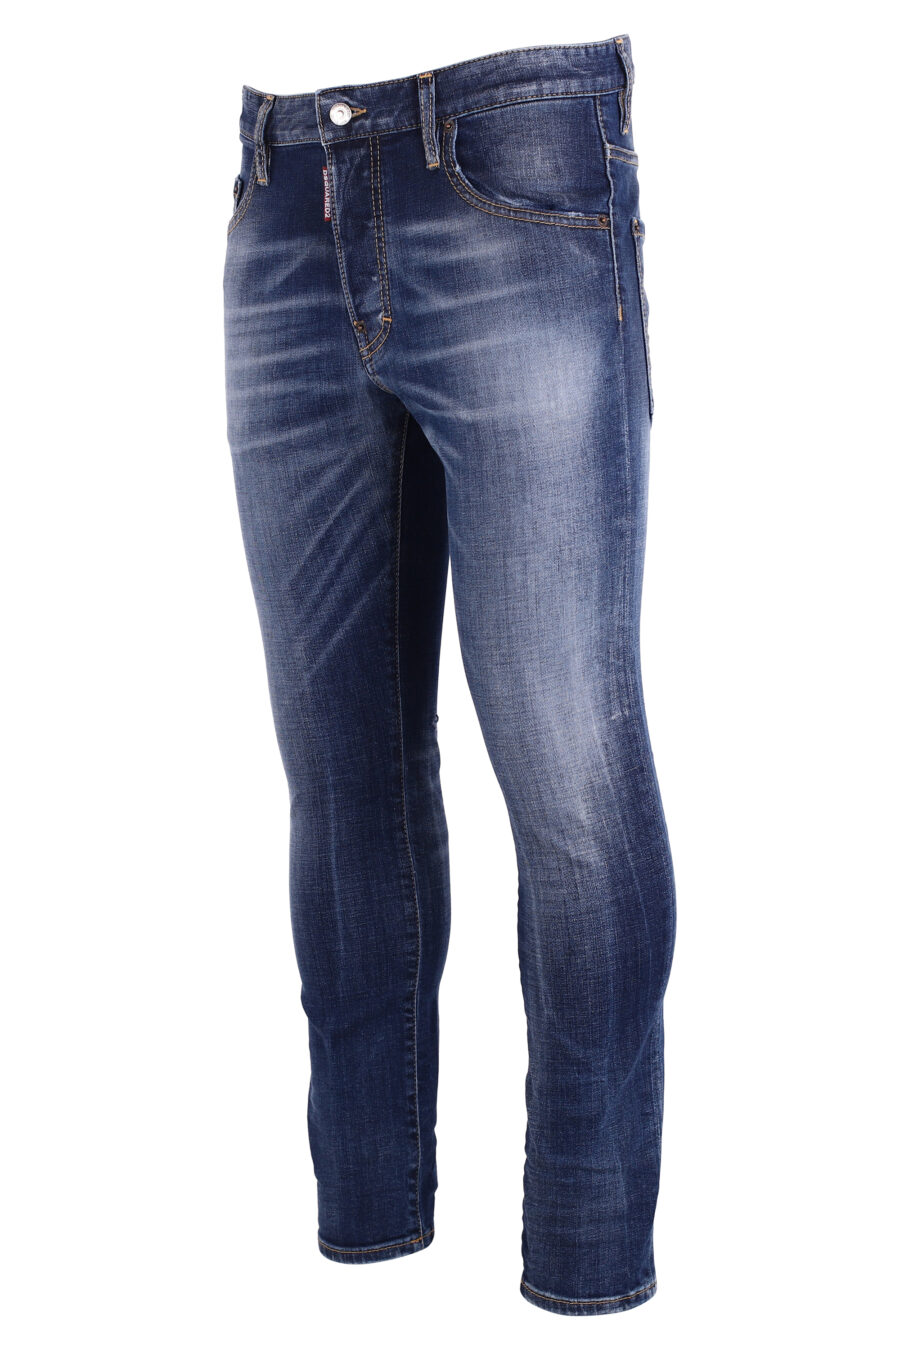 Jeans "Skaterjeans" blau getragen - IMG 8991